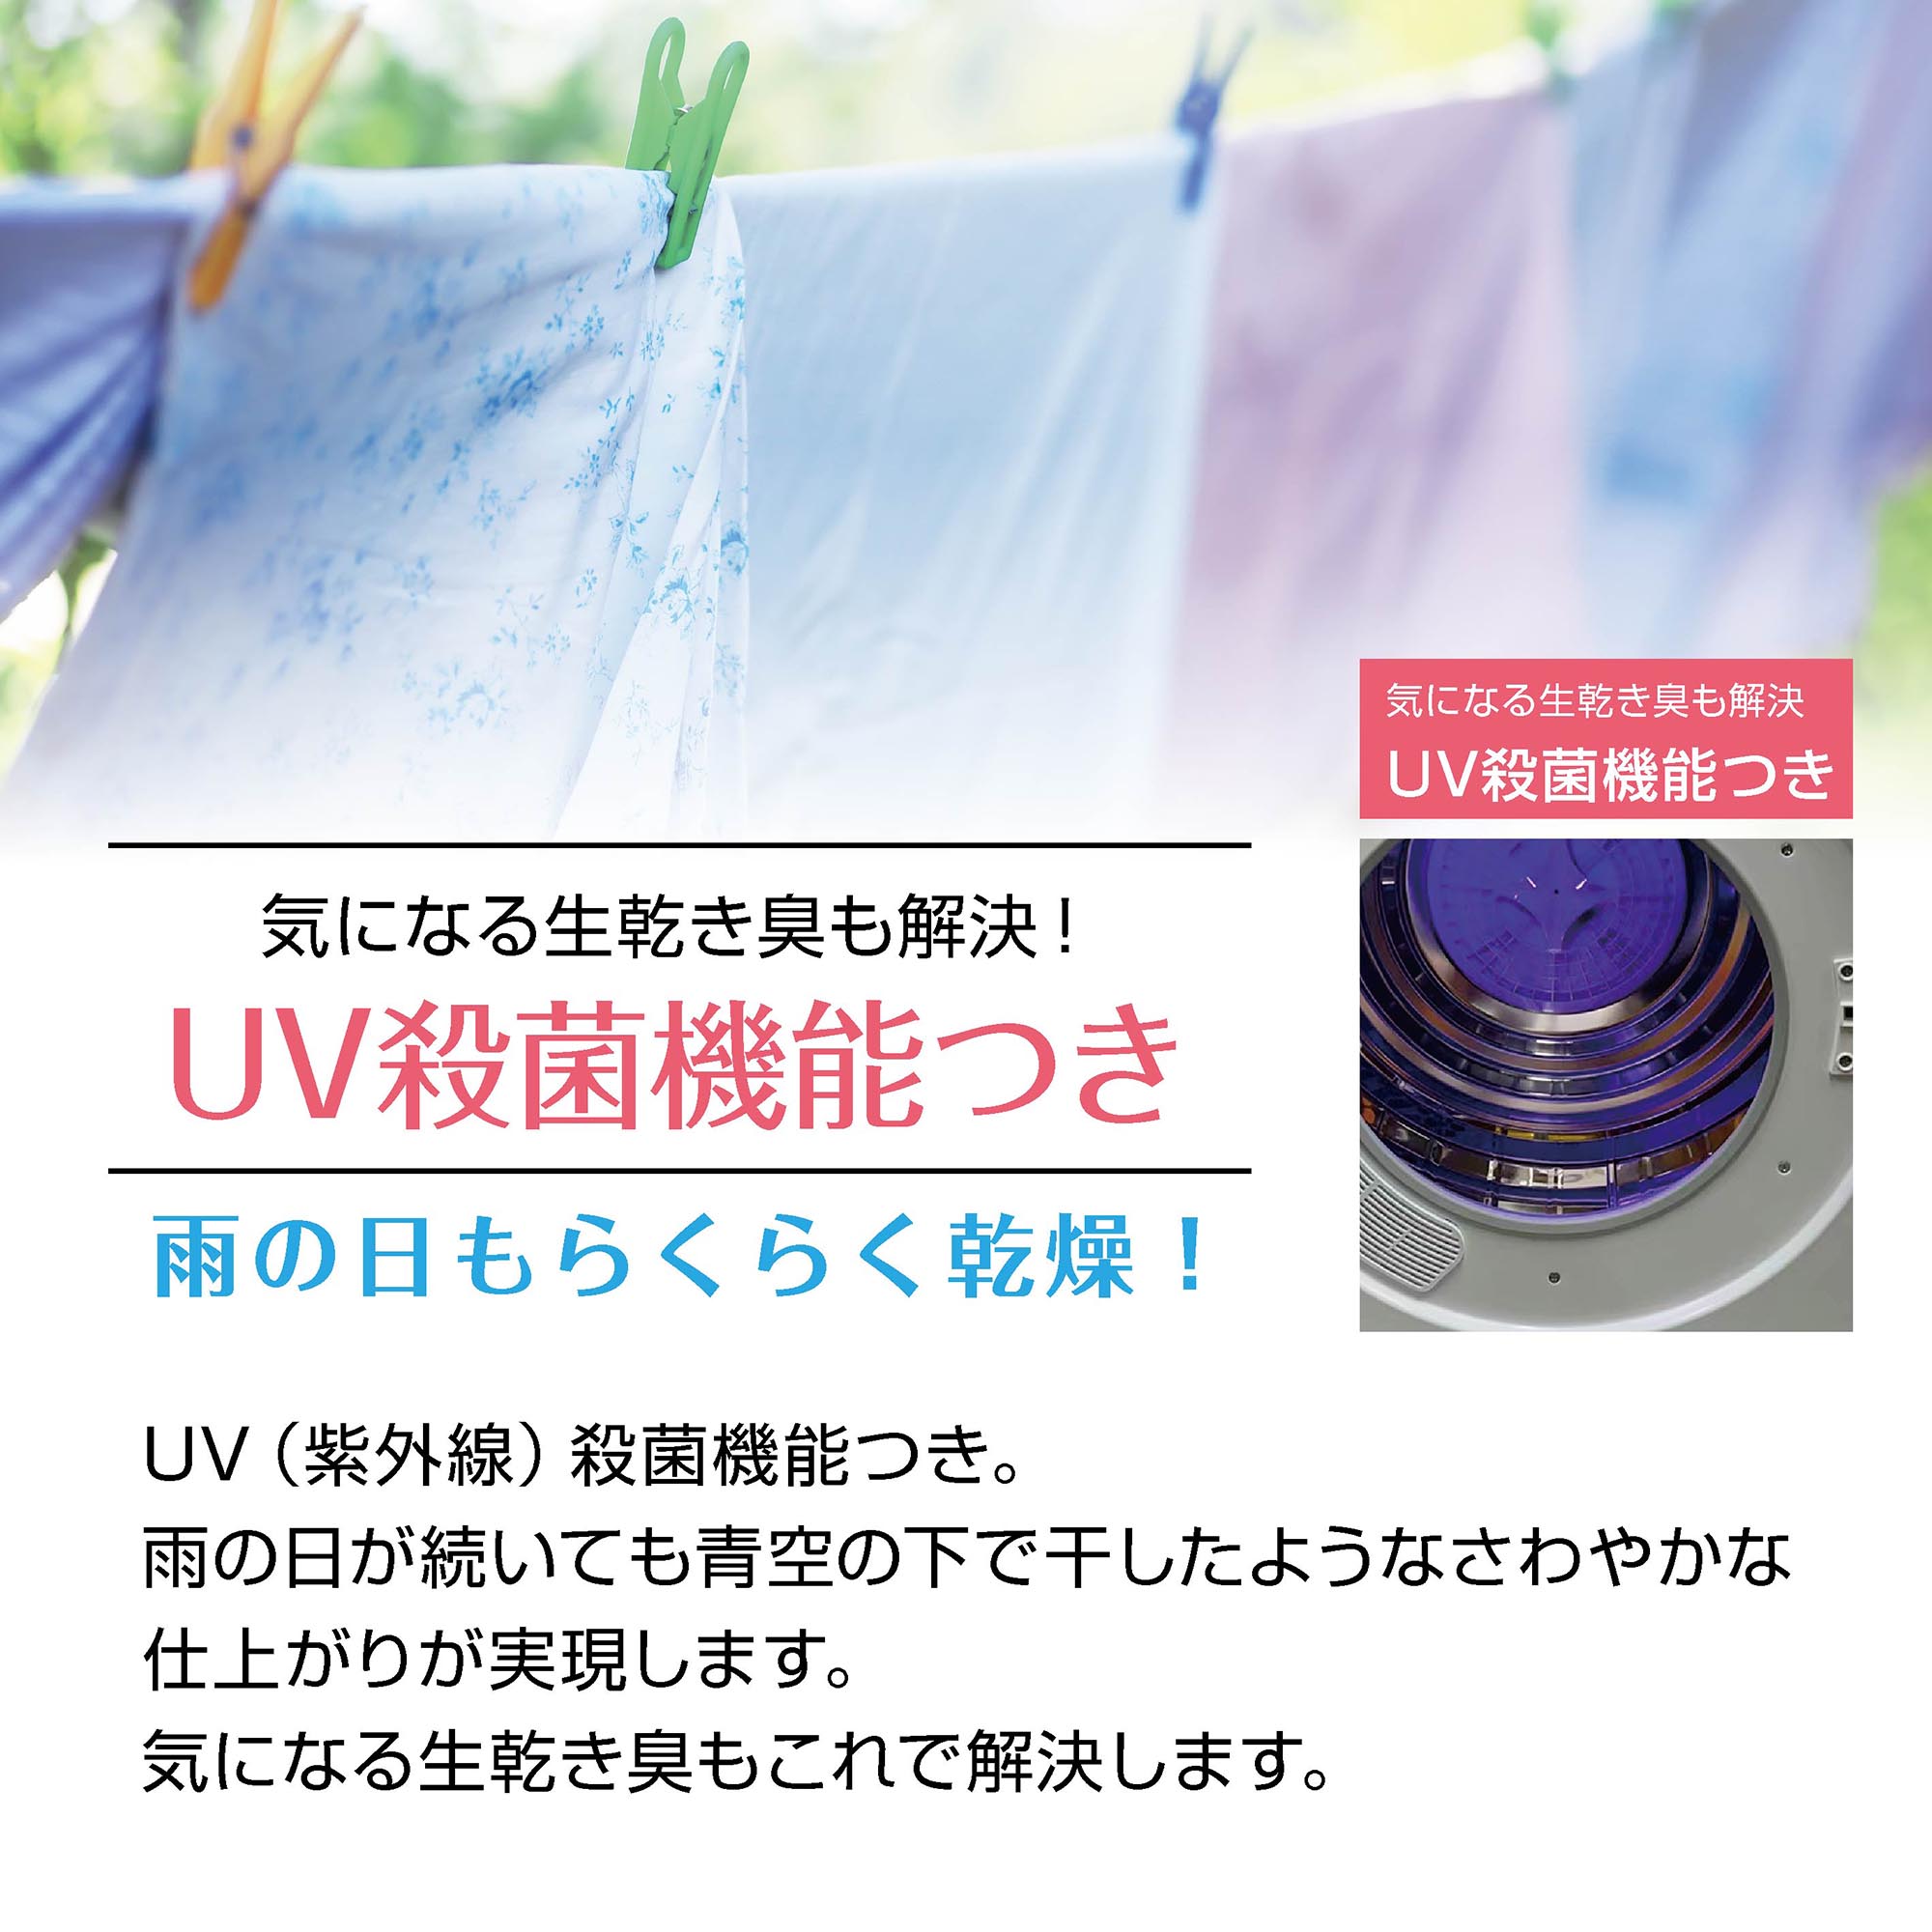 UV機能付き 衣類乾燥機 6kg - Yoquna